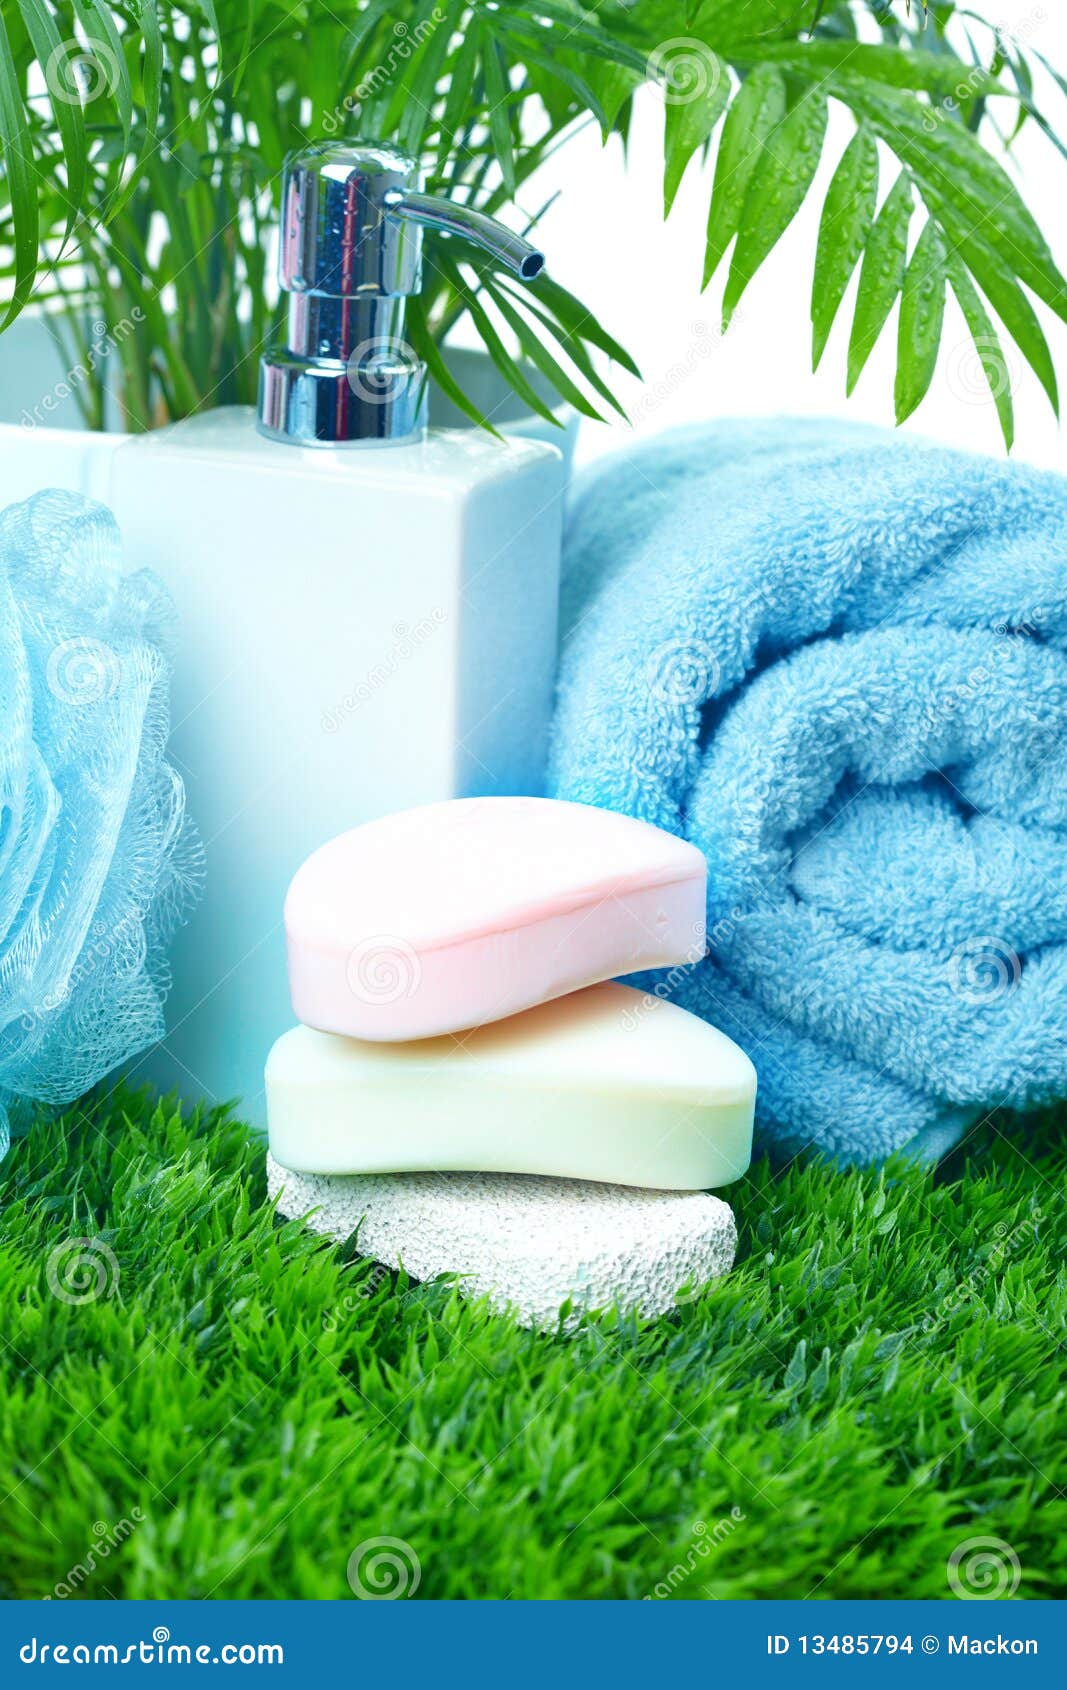 Кран полотенце. Мыло и полотенце. Полотенце для крана. Полотенца и мыло фон. Полотенца моющий.